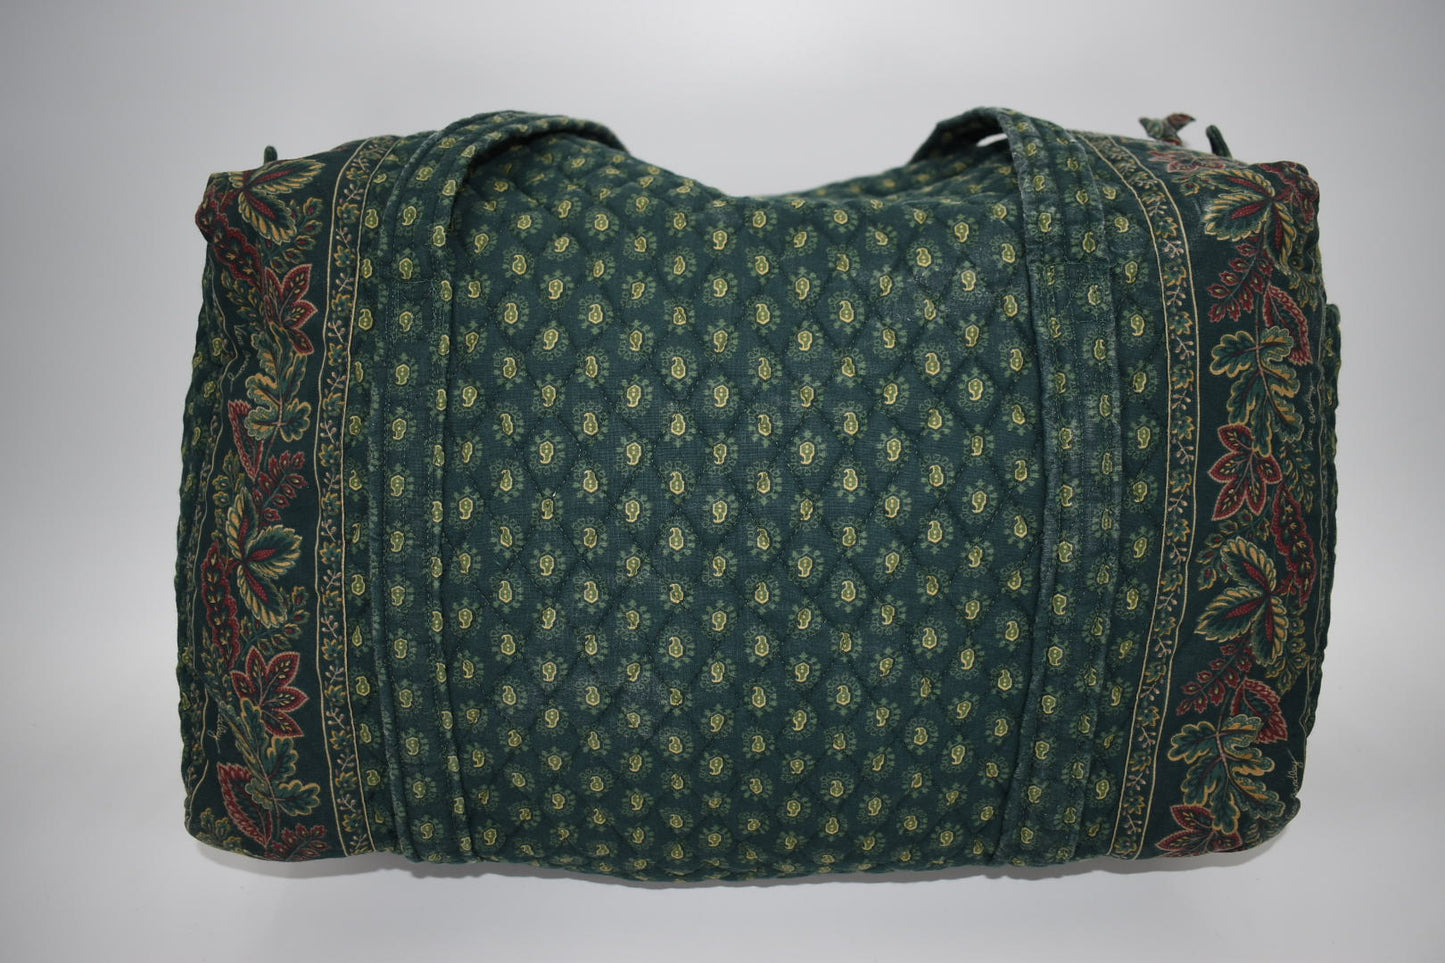 Vintage Vera Bradley Medium Duffel Bag in Classic Green-1998 Pattern